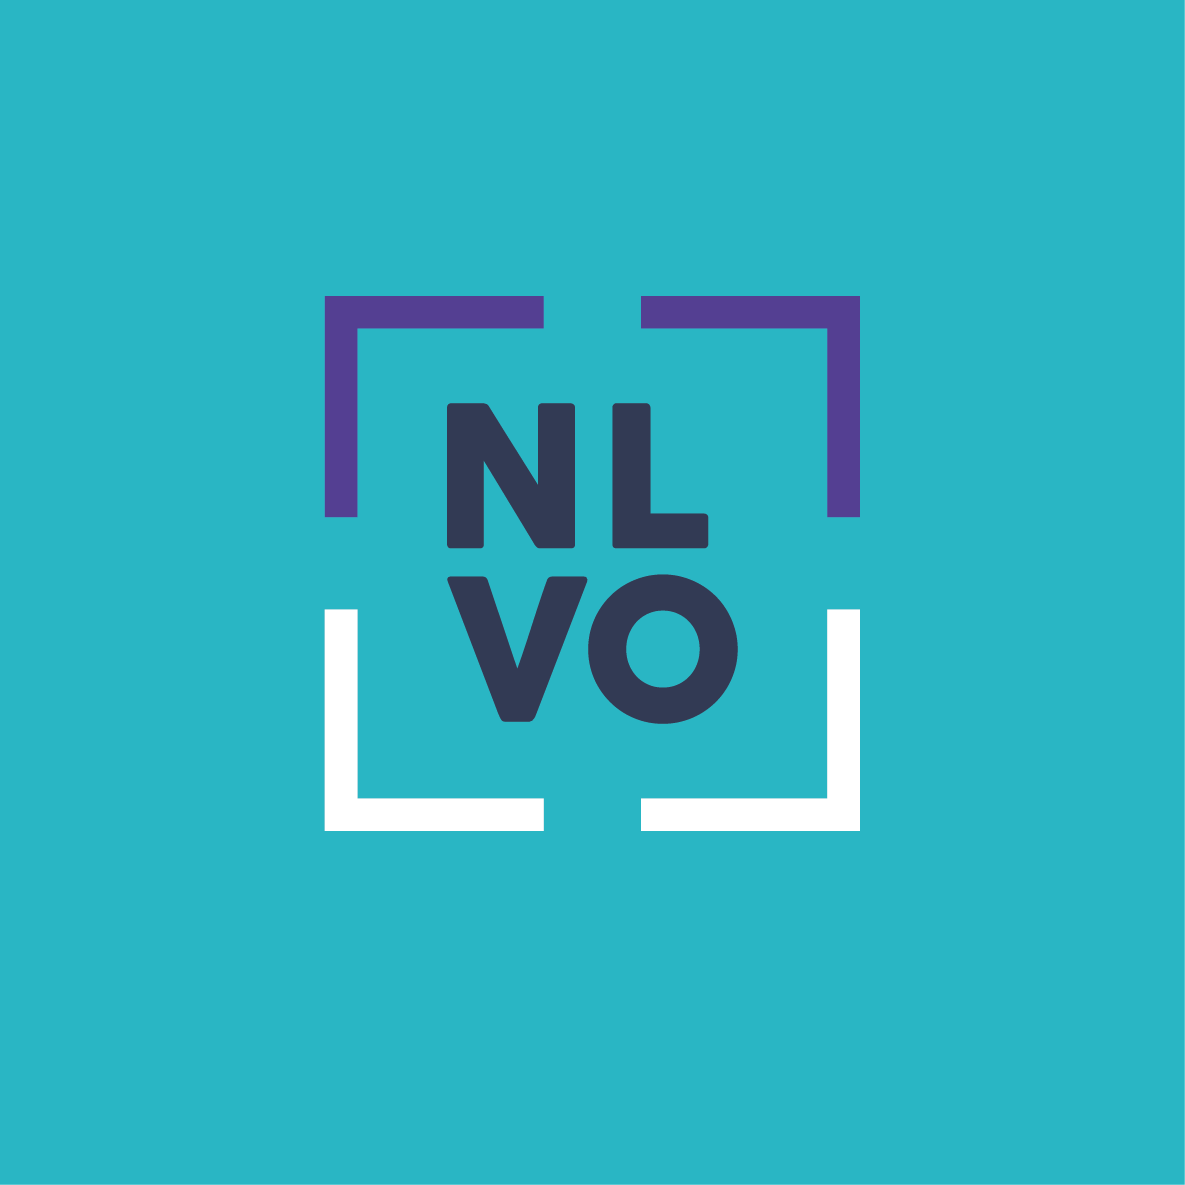 NLVO logo on blue background